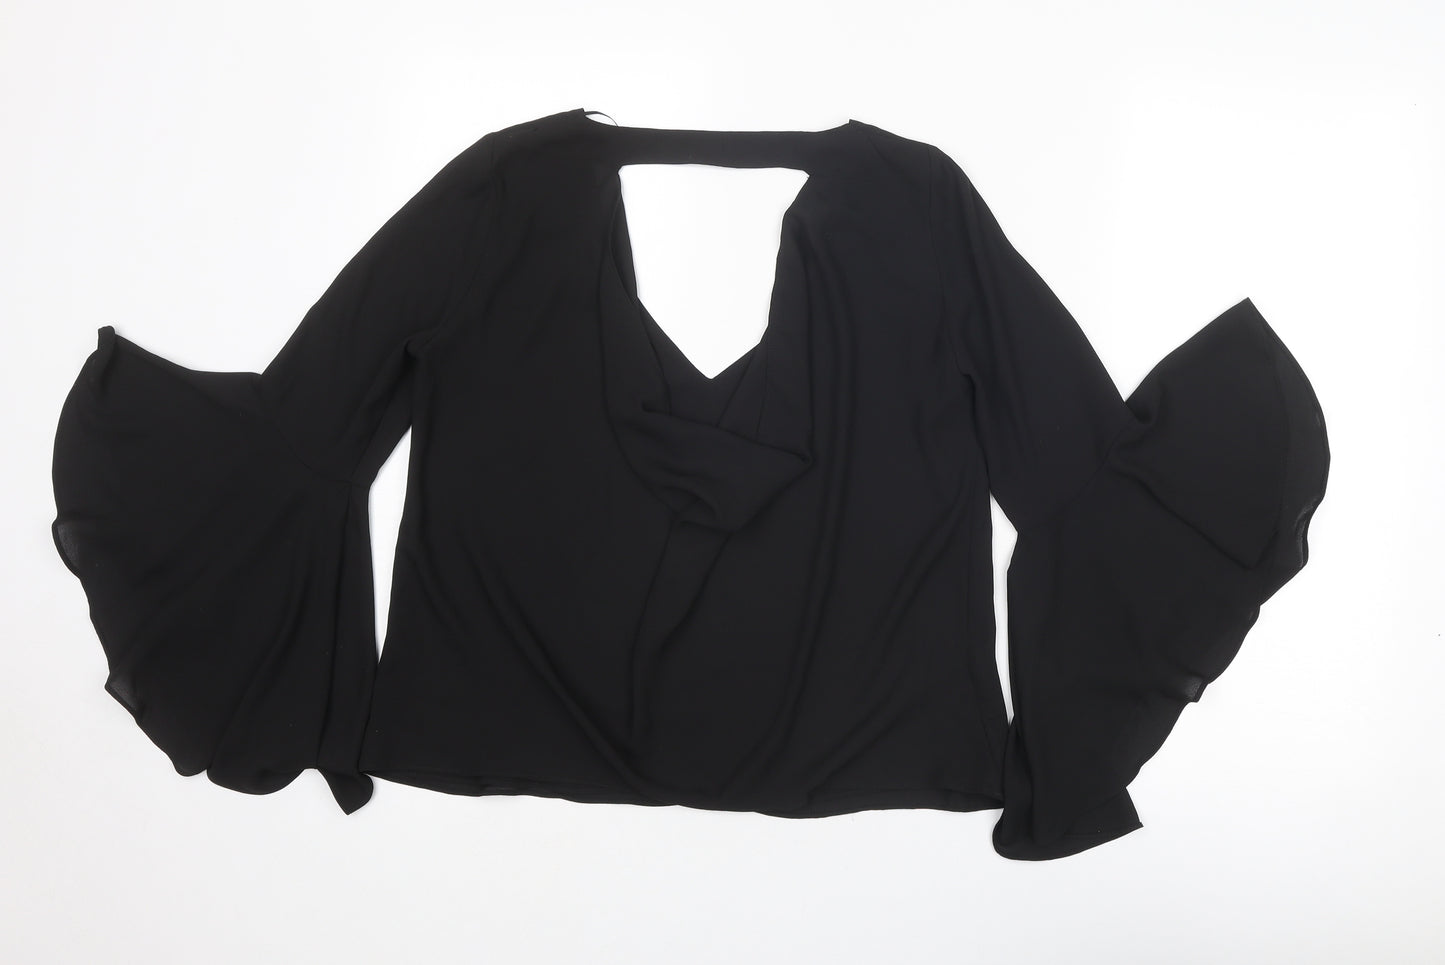 Zara Womens Black Polyester Basic Blouse Size M V-Neck